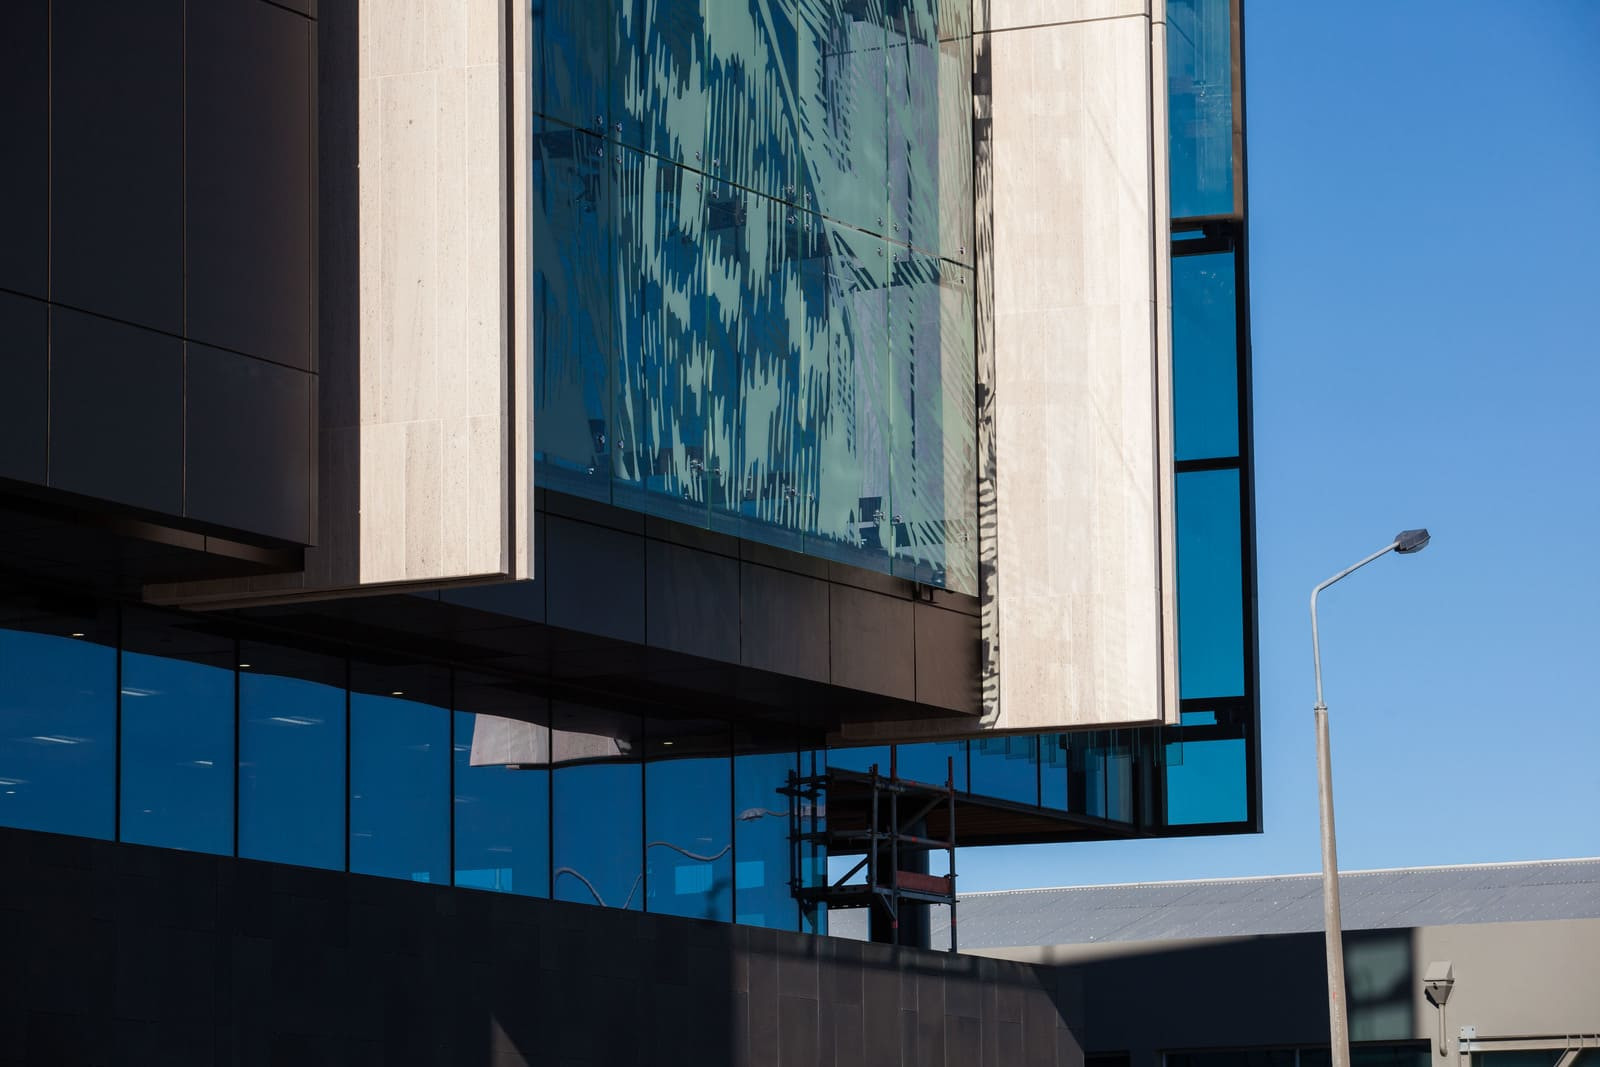 Christchurch Justice Precinct featuring elegant patterned glass exterior